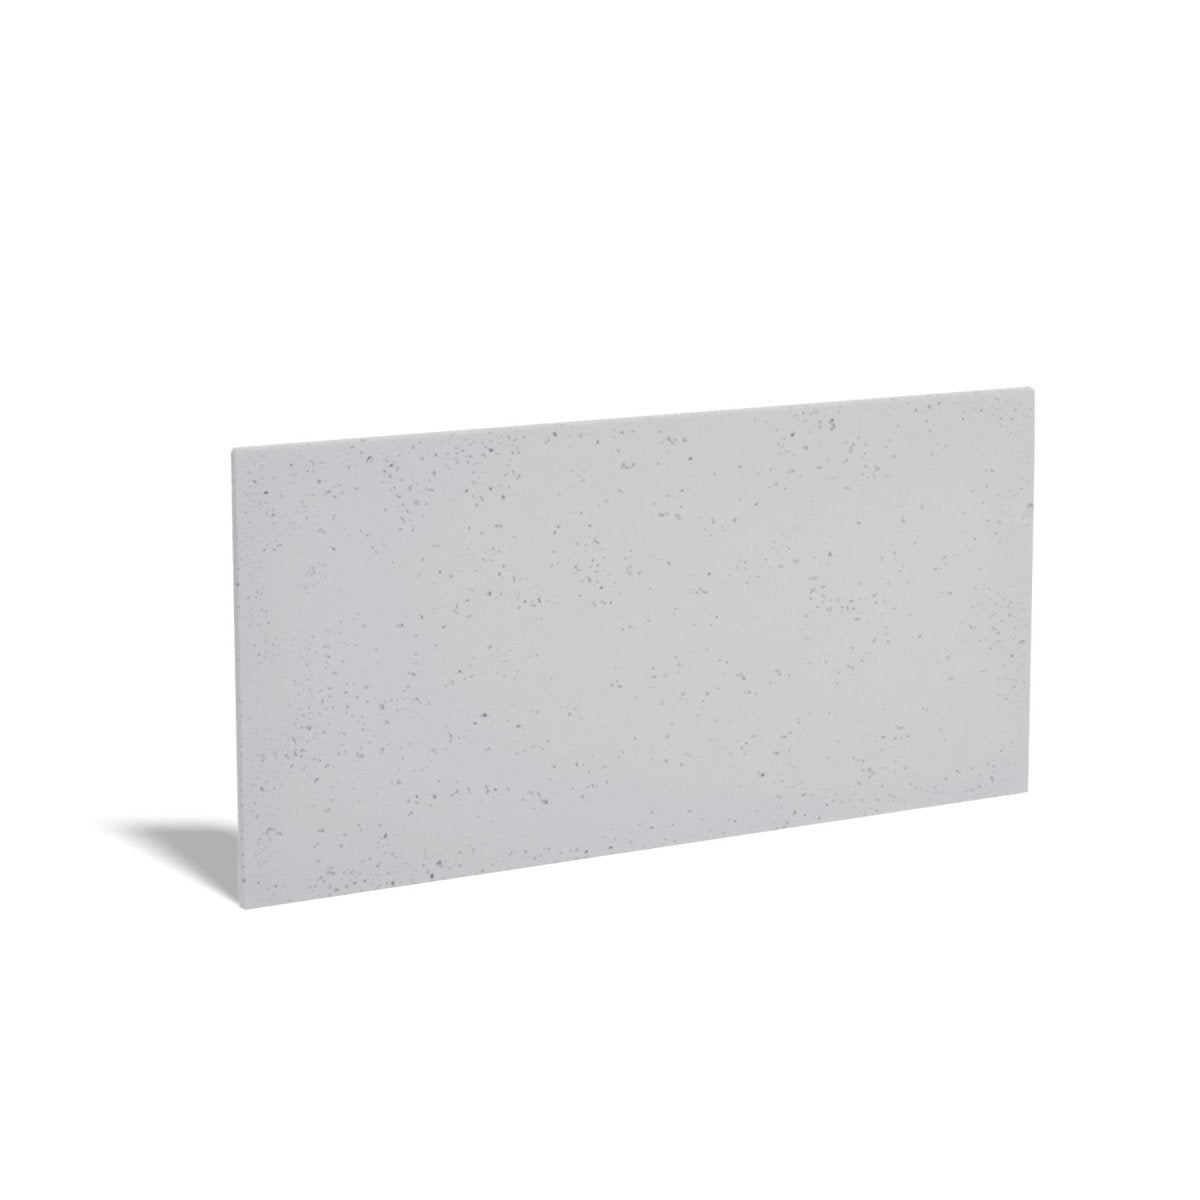 Concrete Wall Panel EXTERIOR - 150 x 75 cm - DecorMania.eu